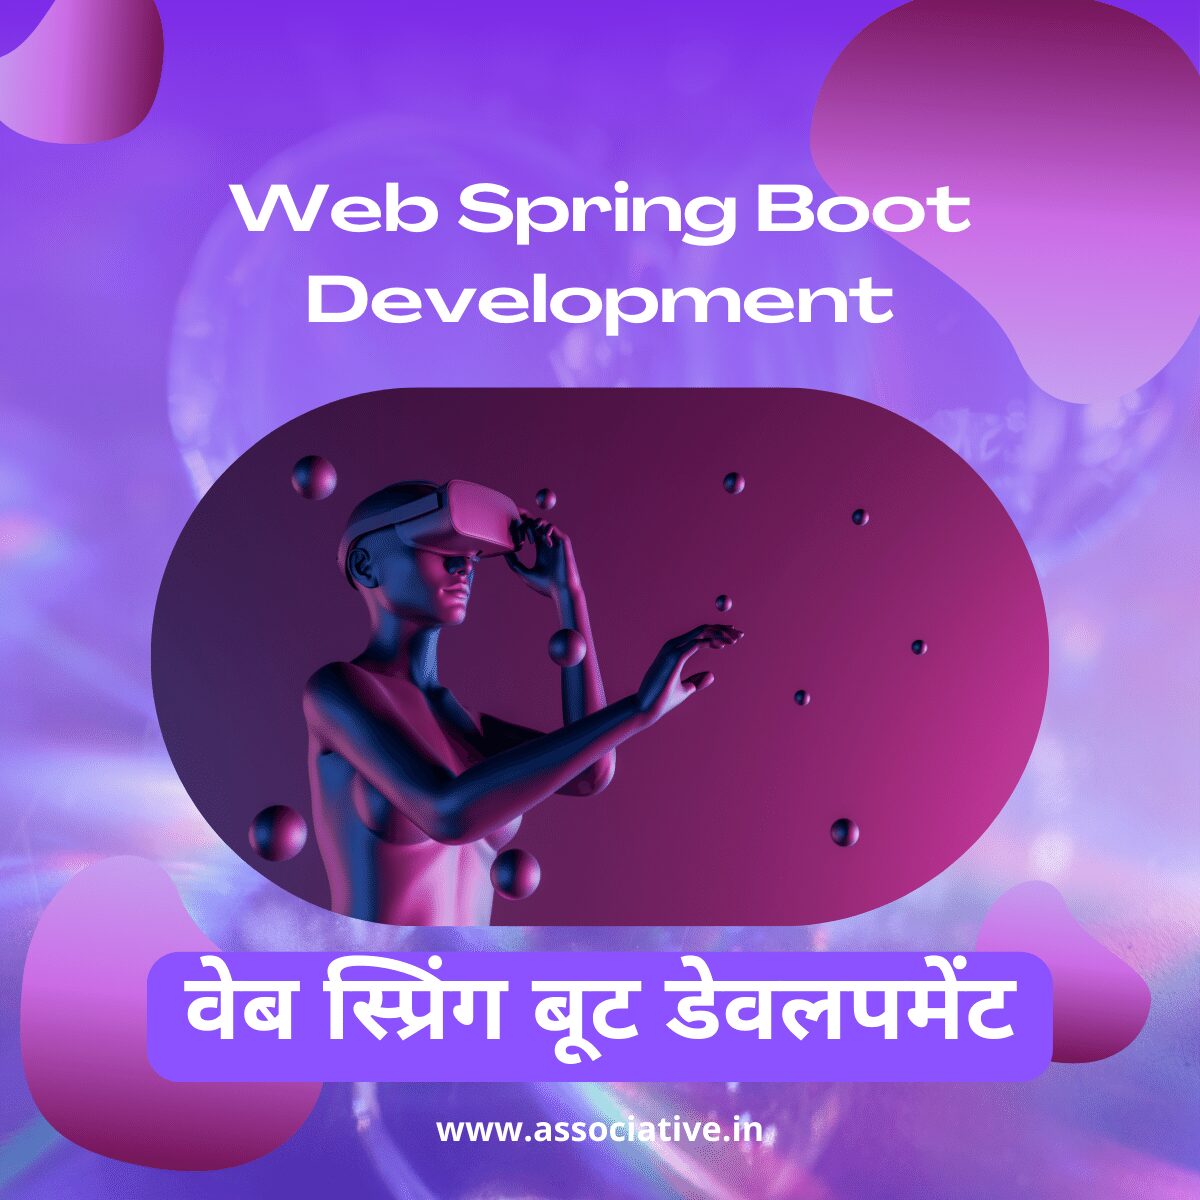 Web Spring Boot Development वेब स्प्रिंग बूट डेवलपमेंट